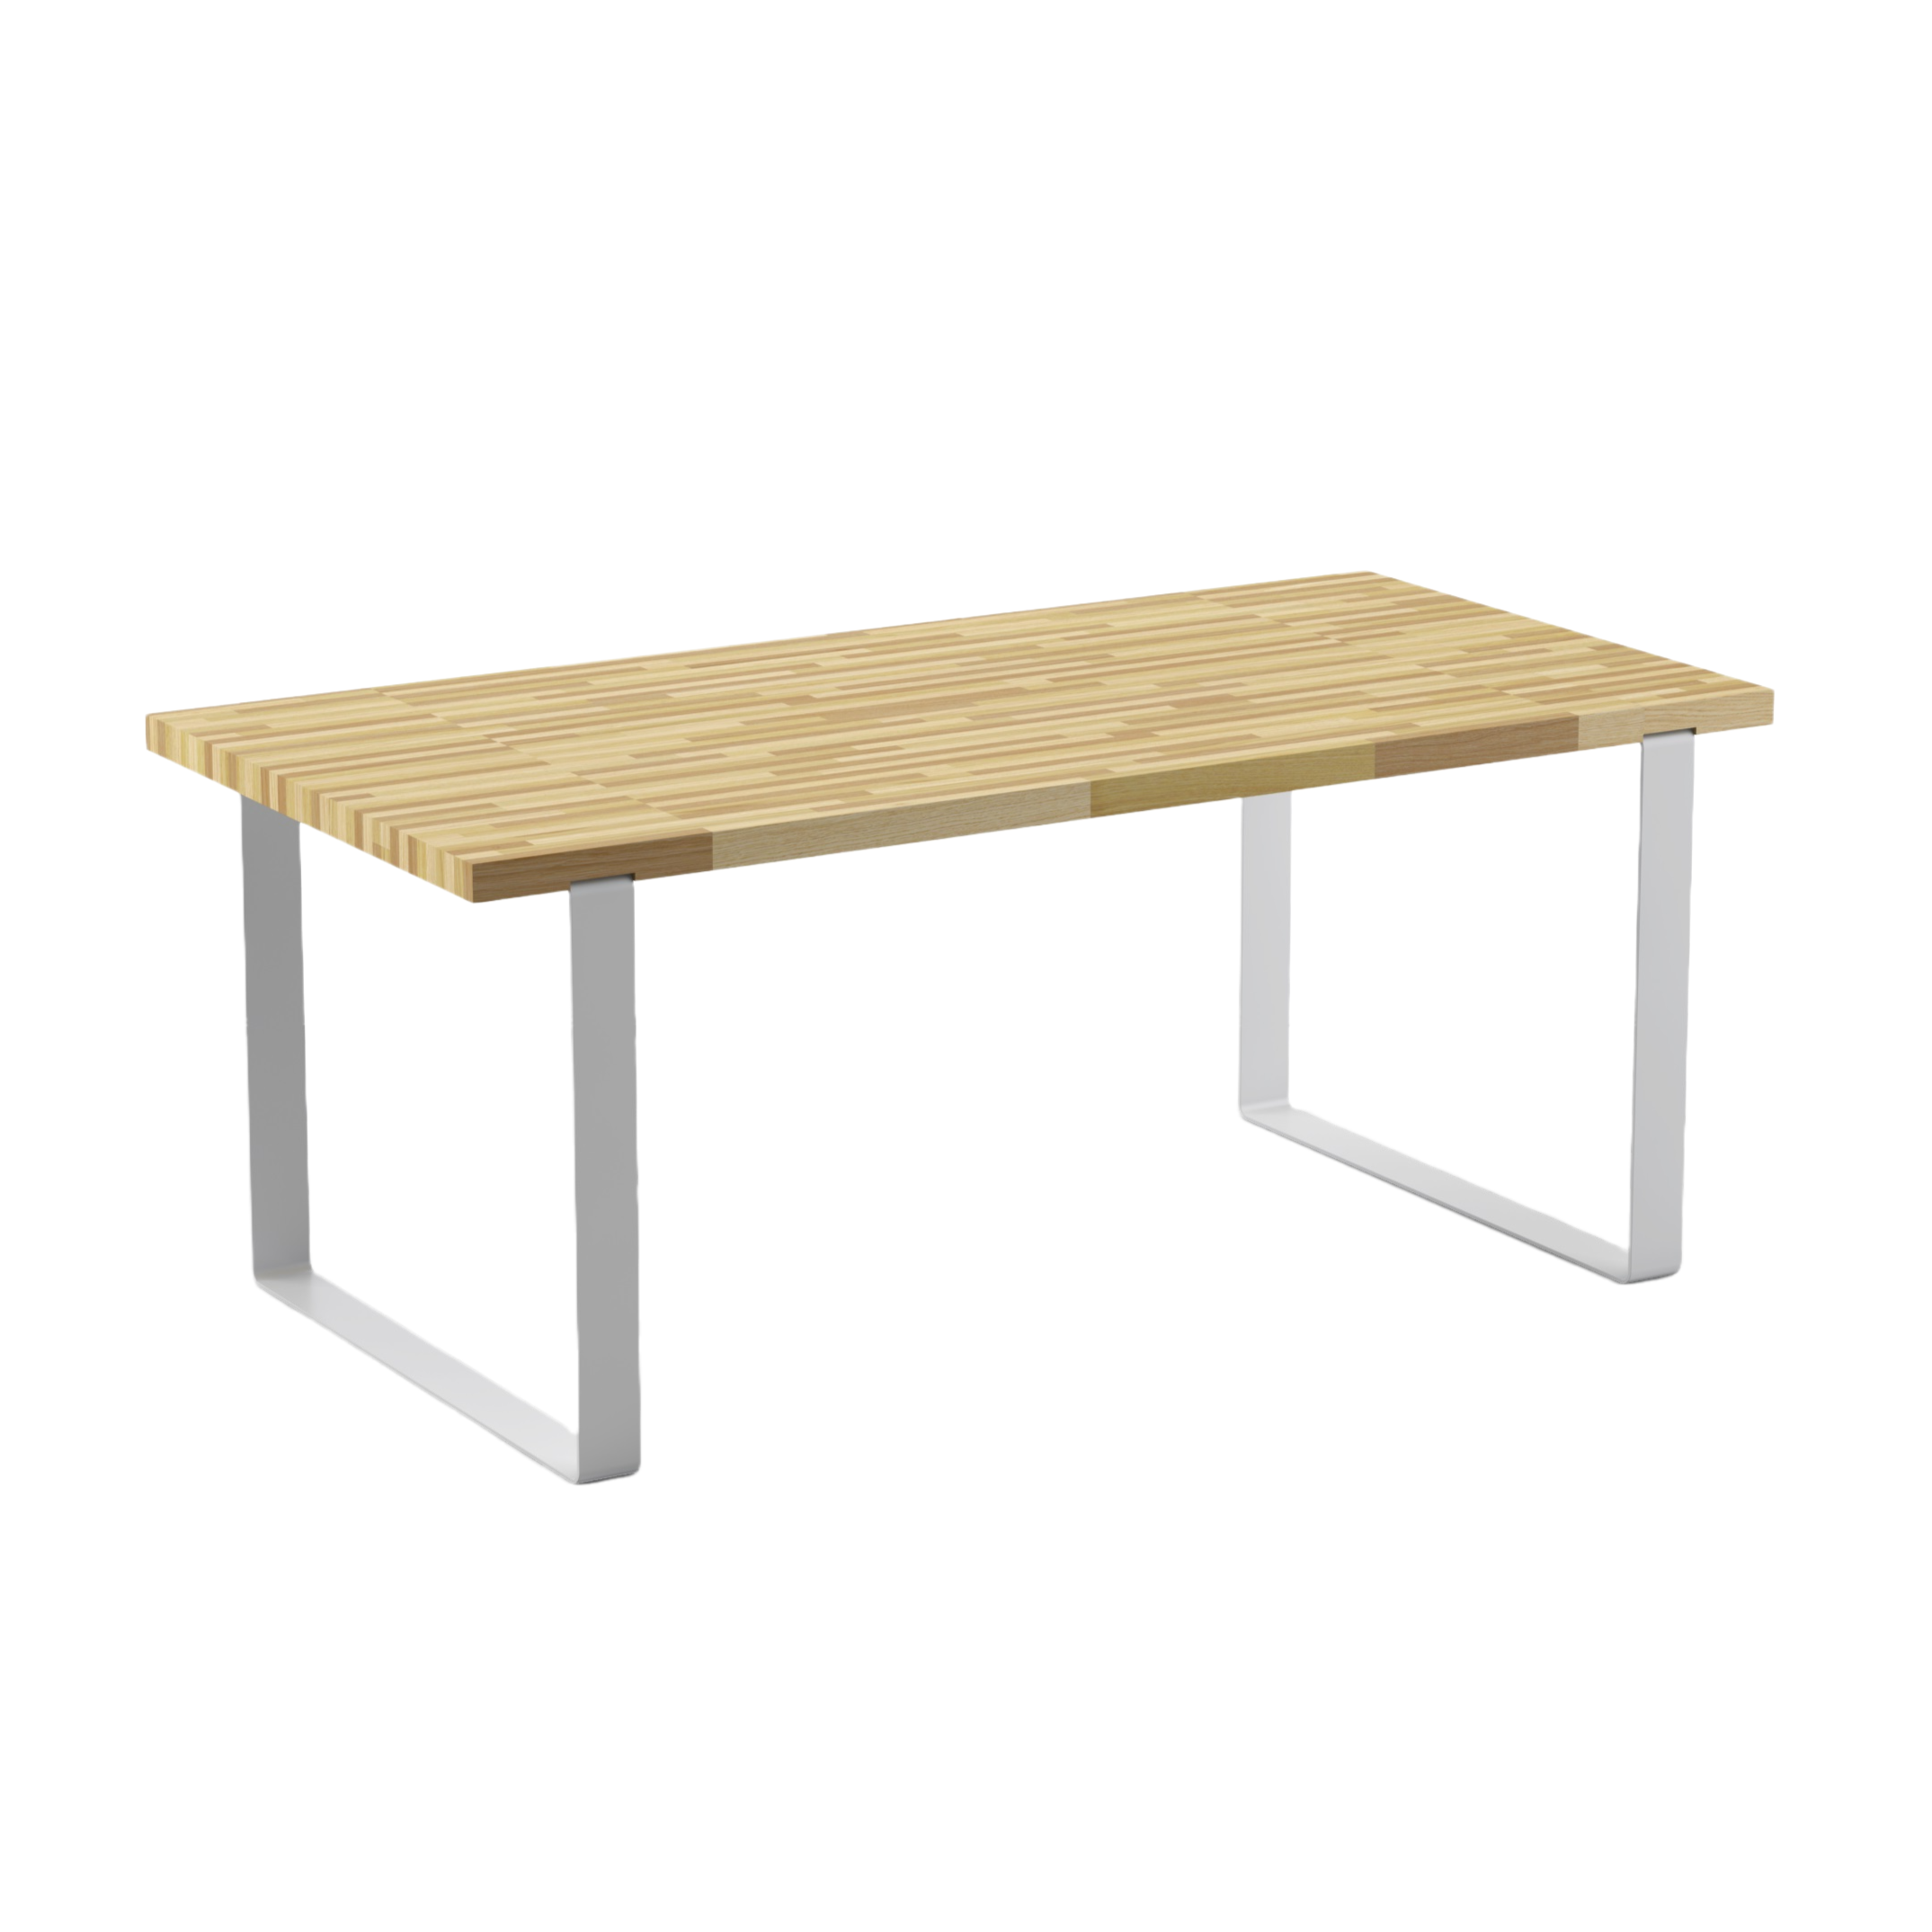 DABLIN table white, Absynth, Eye on Design